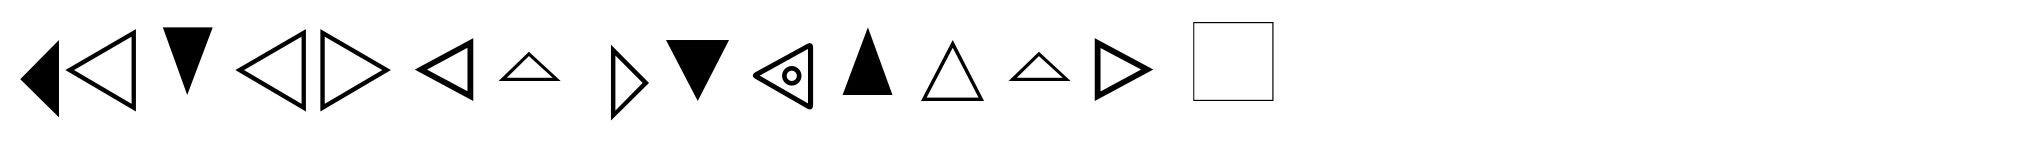 General Symbols 4 image